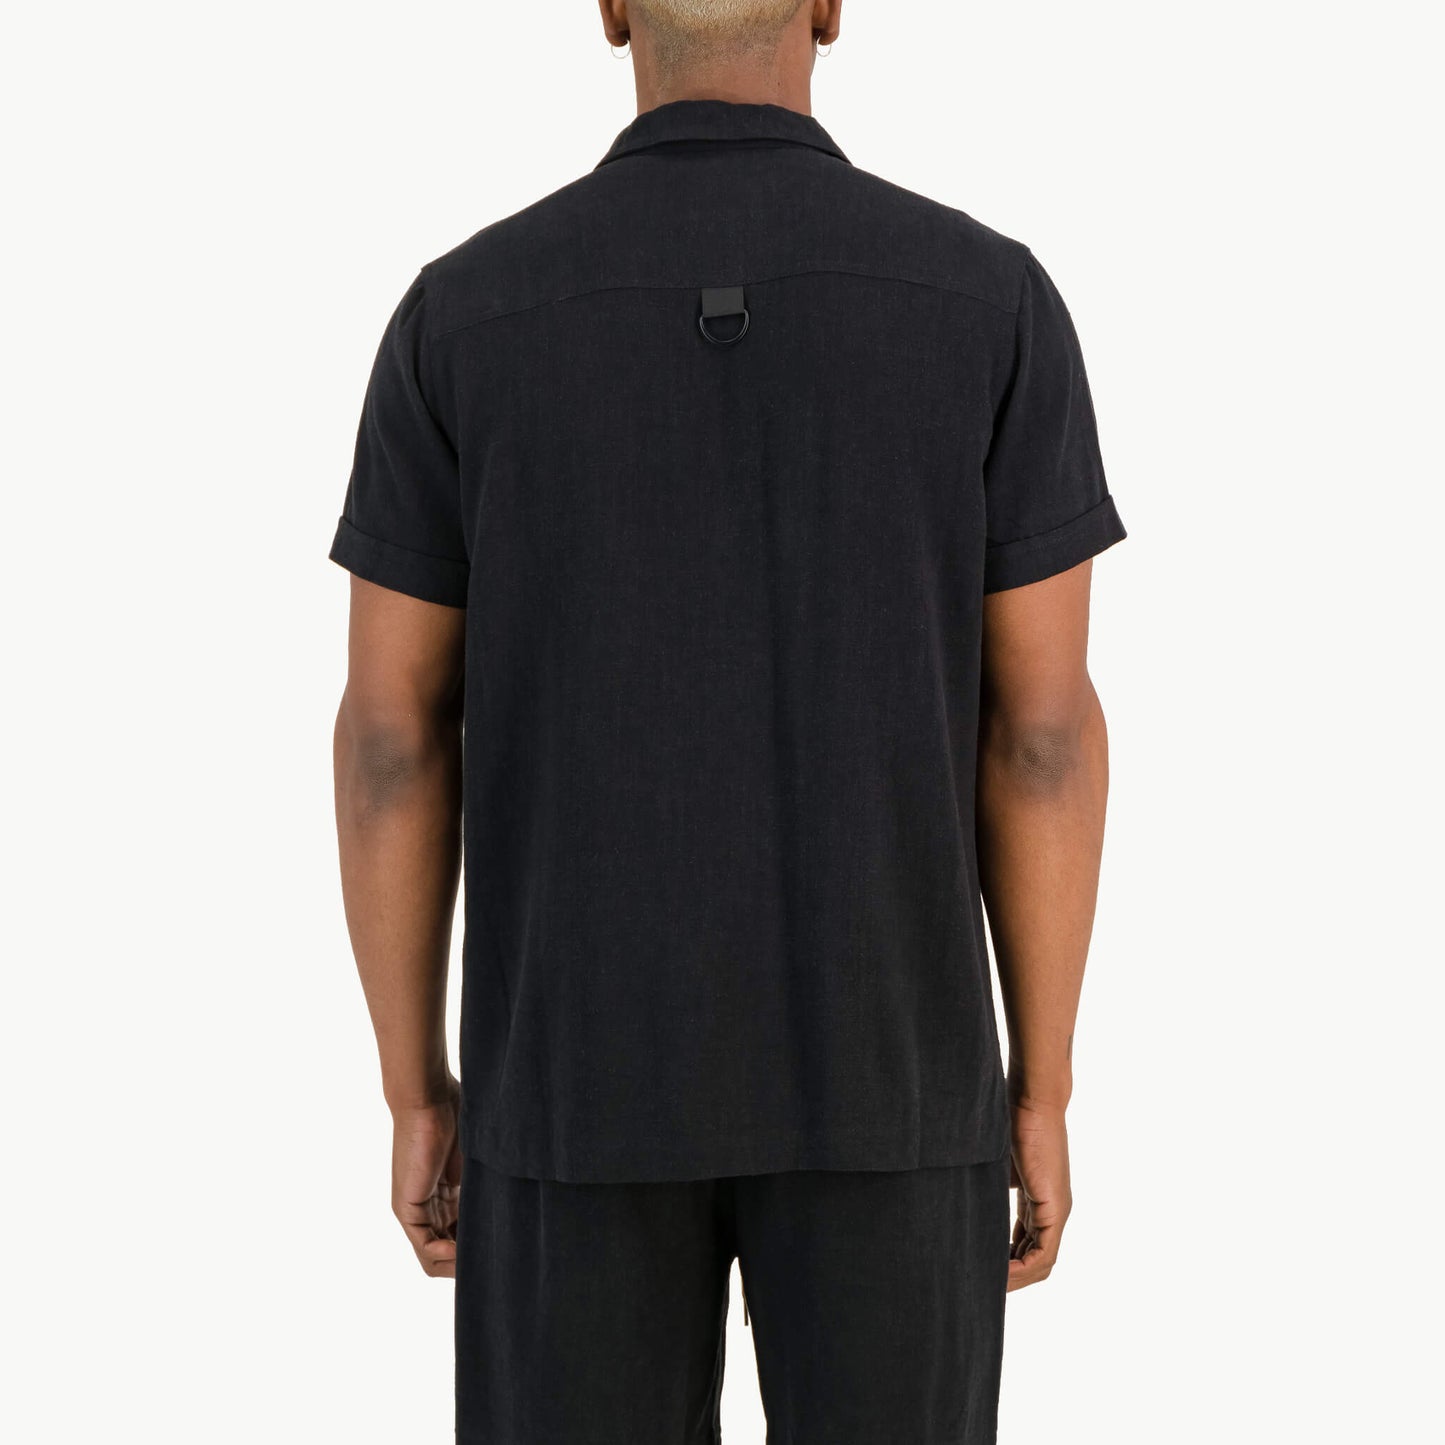 Linus Shirt  - Black